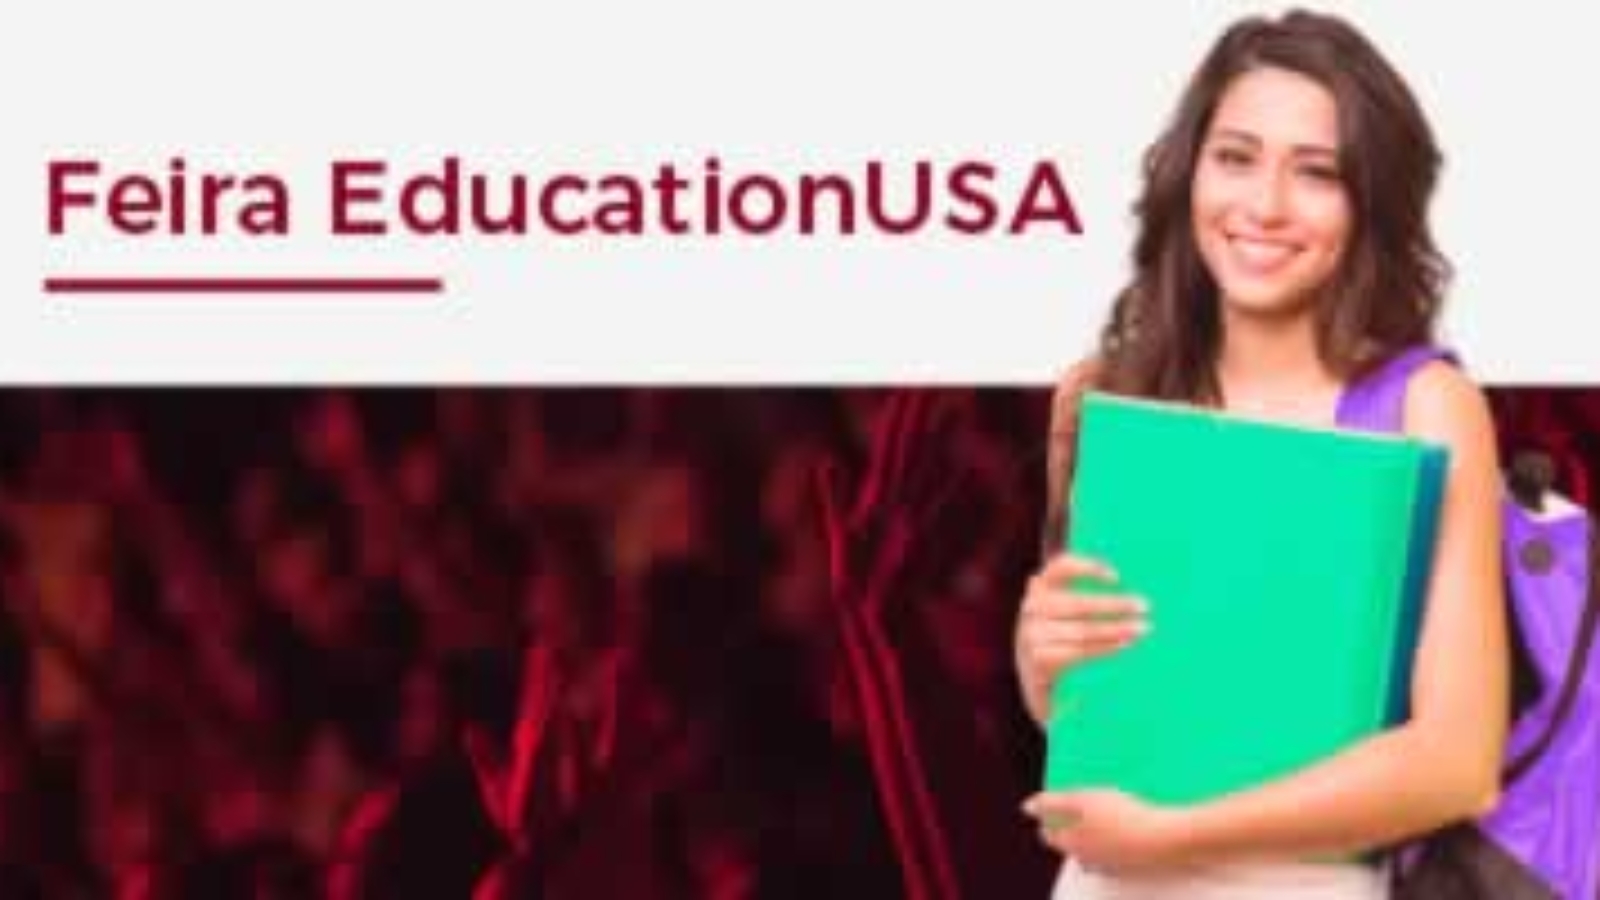 Feira Education USA